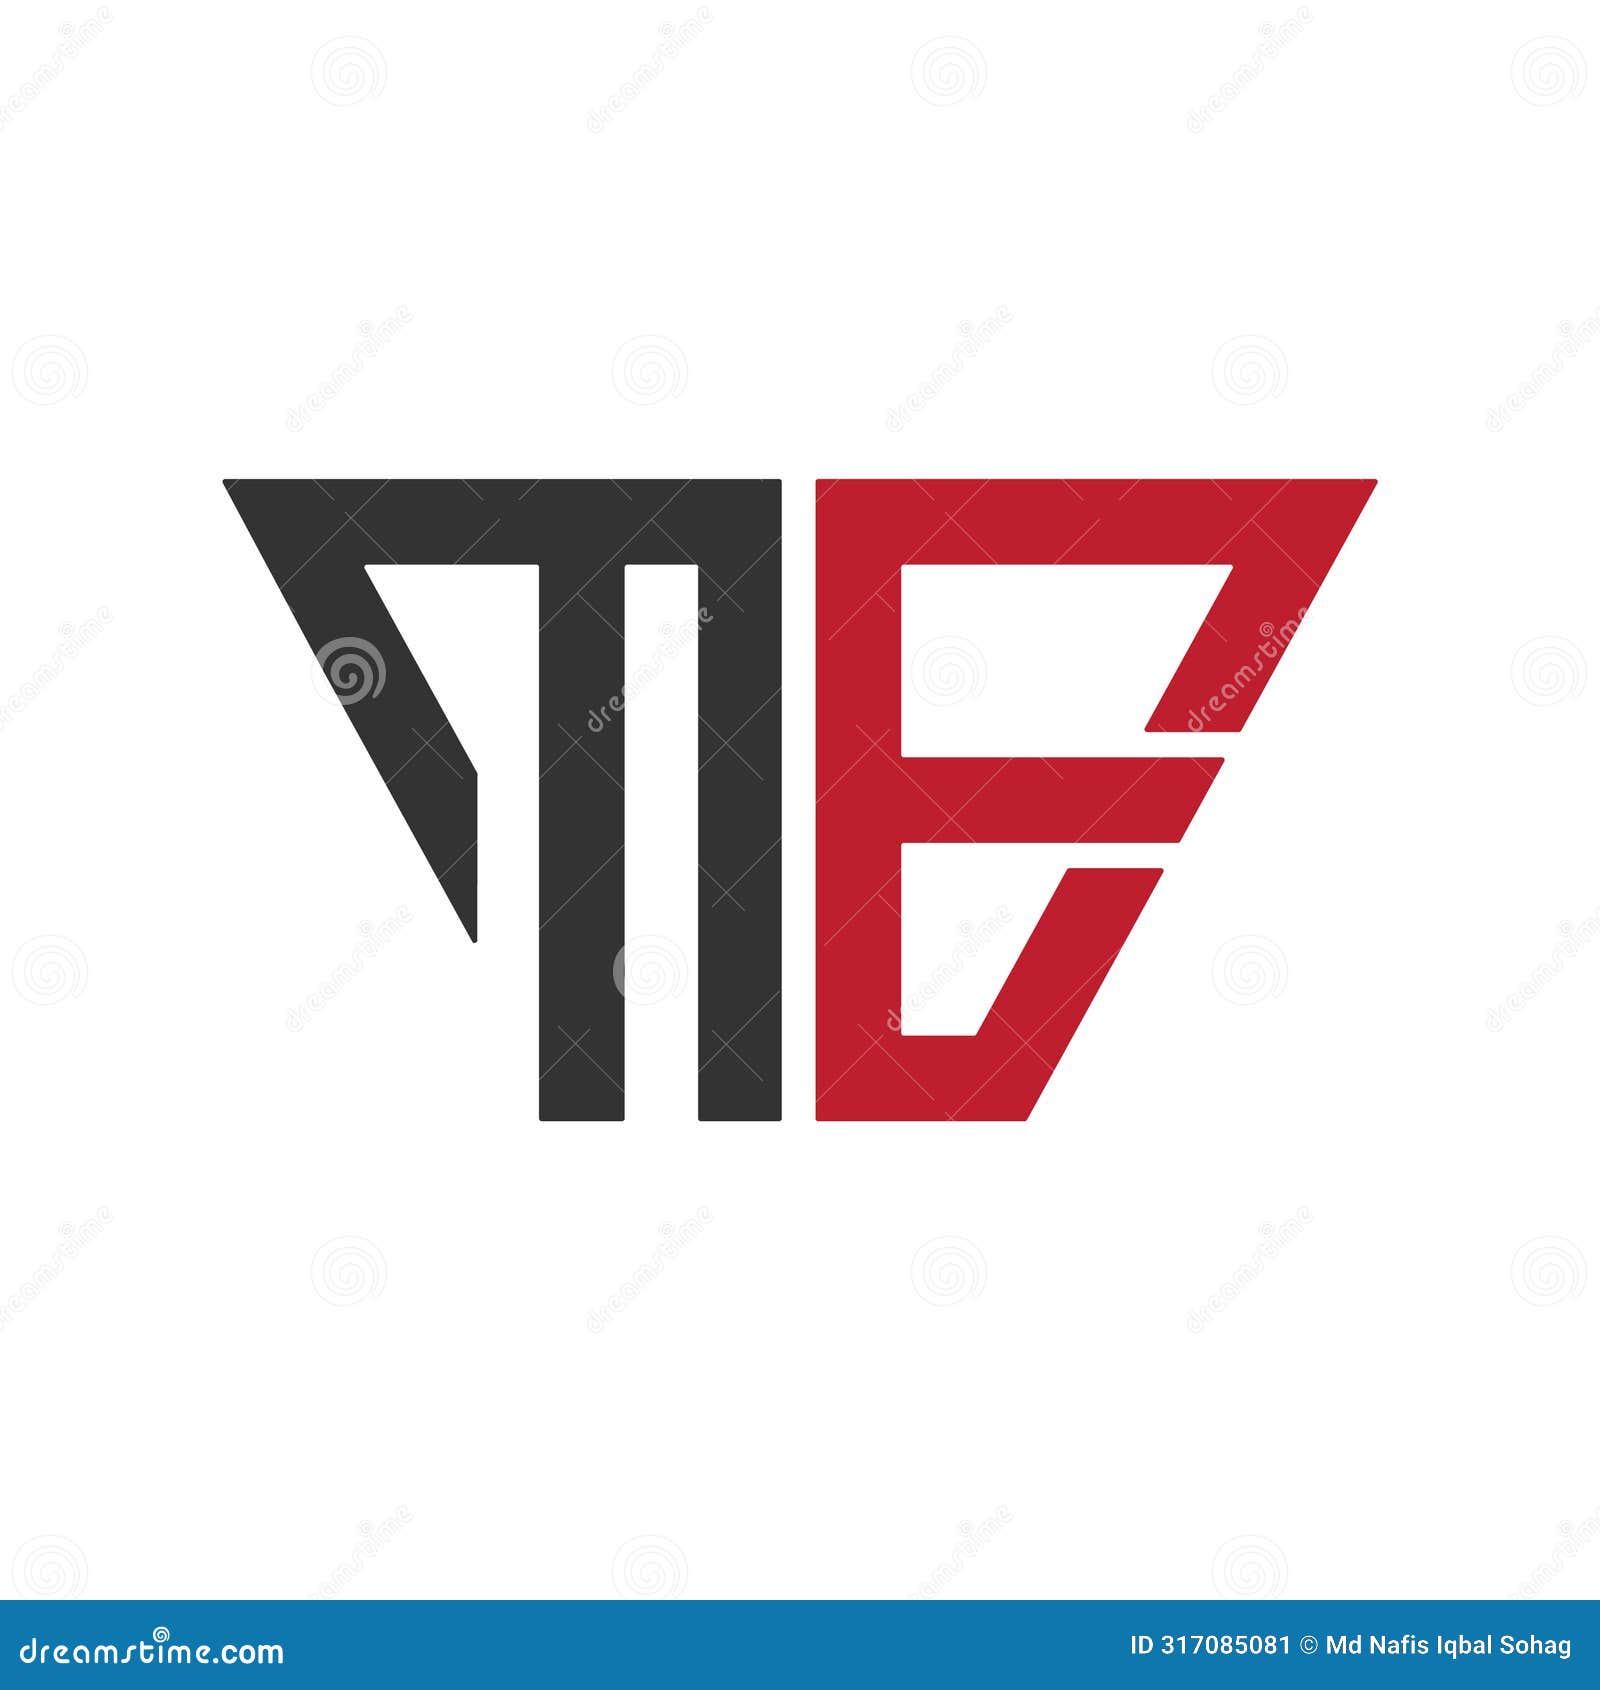 me logo template  icon. initials me letters logo . et logo   image. em or et logo